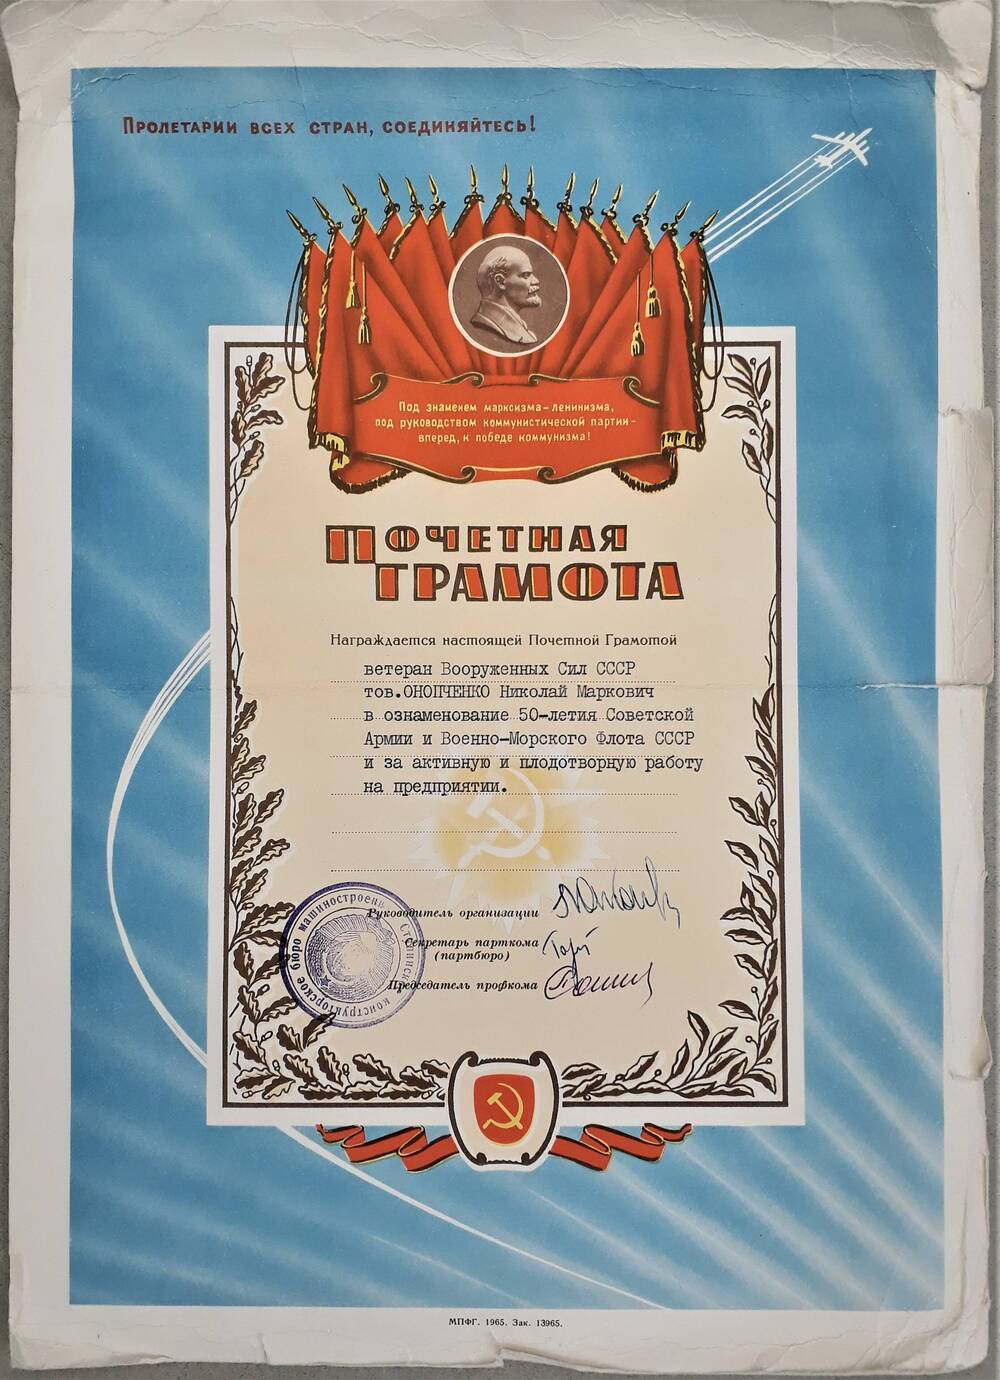 Почетная грамота ветерана Вооруженных сил Онопченко Николая Марковича  за активную и плодотворную работу на предприятии